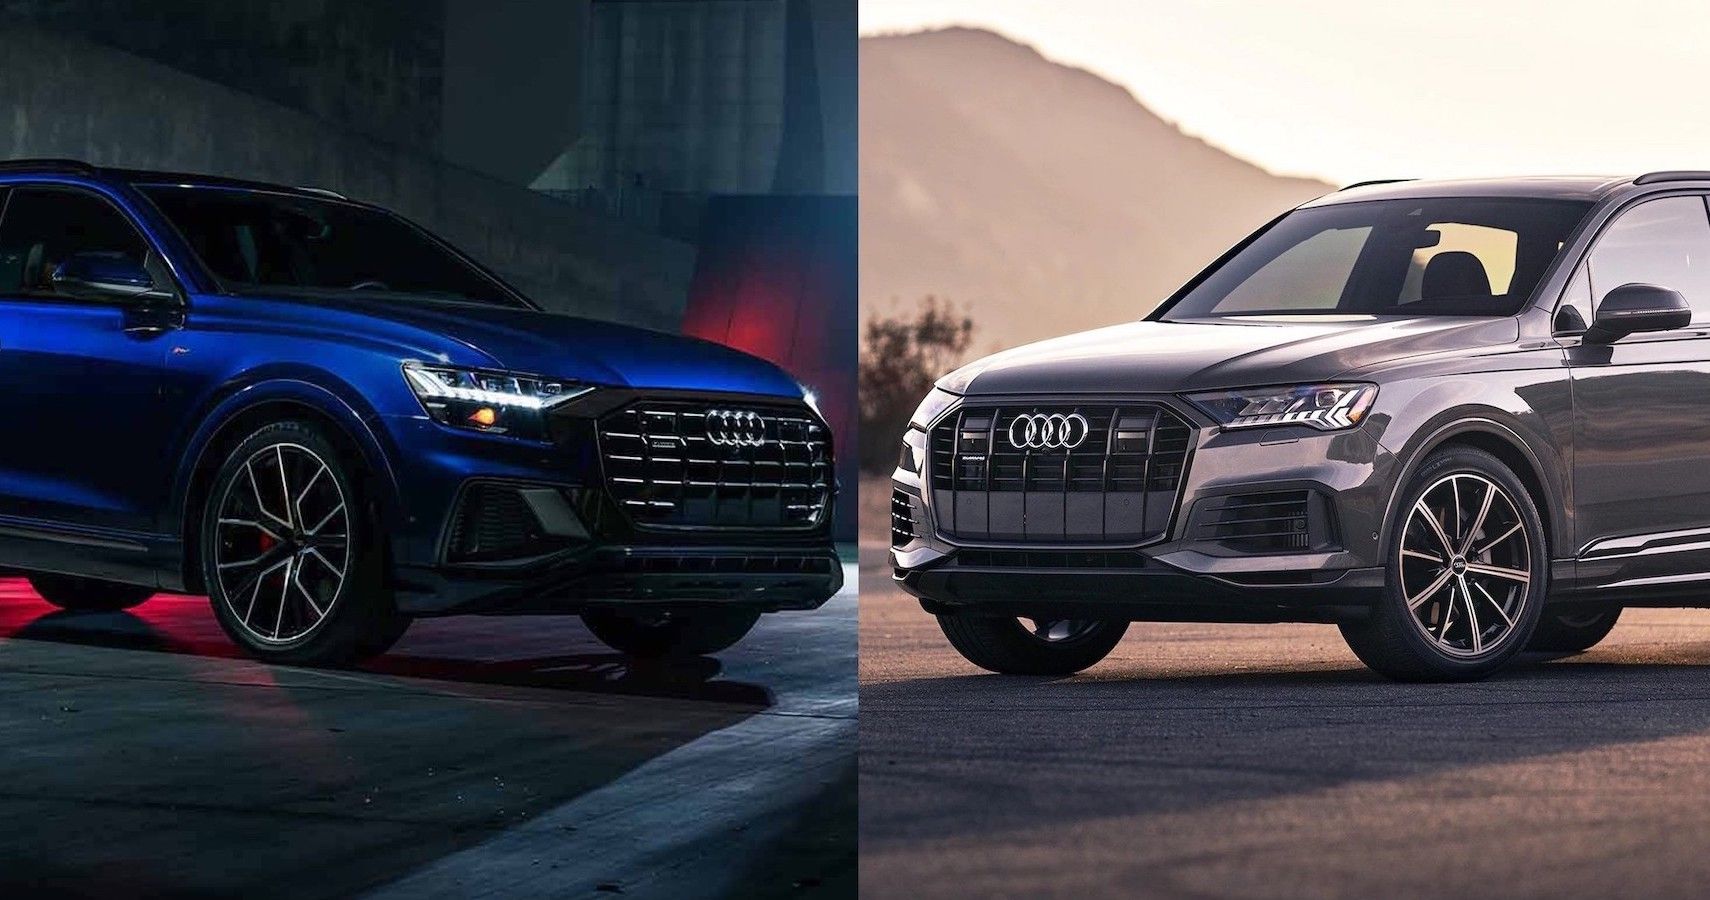 Audi Q7 Vs Q8: Pros And Cons Of Both Models